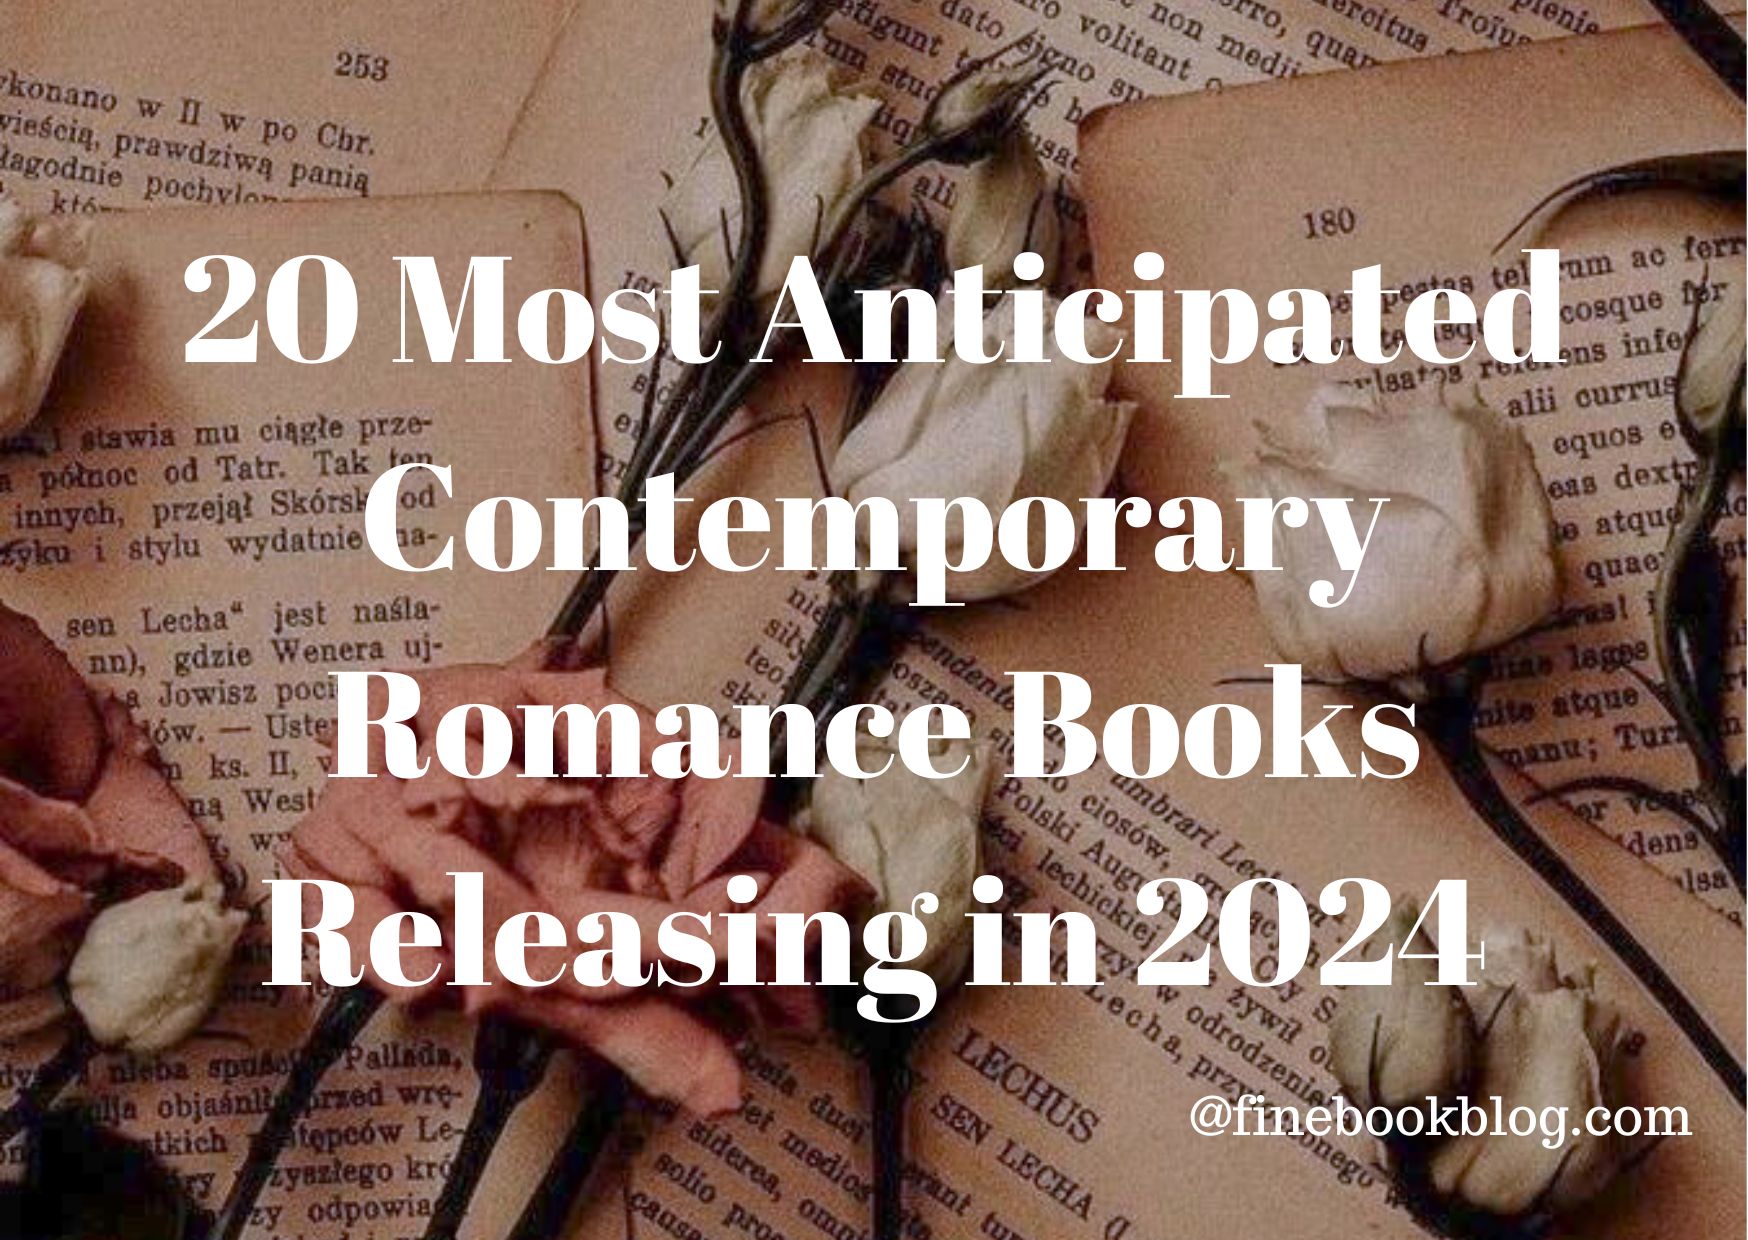 Contemporary-romance-books-releasing-in-2024